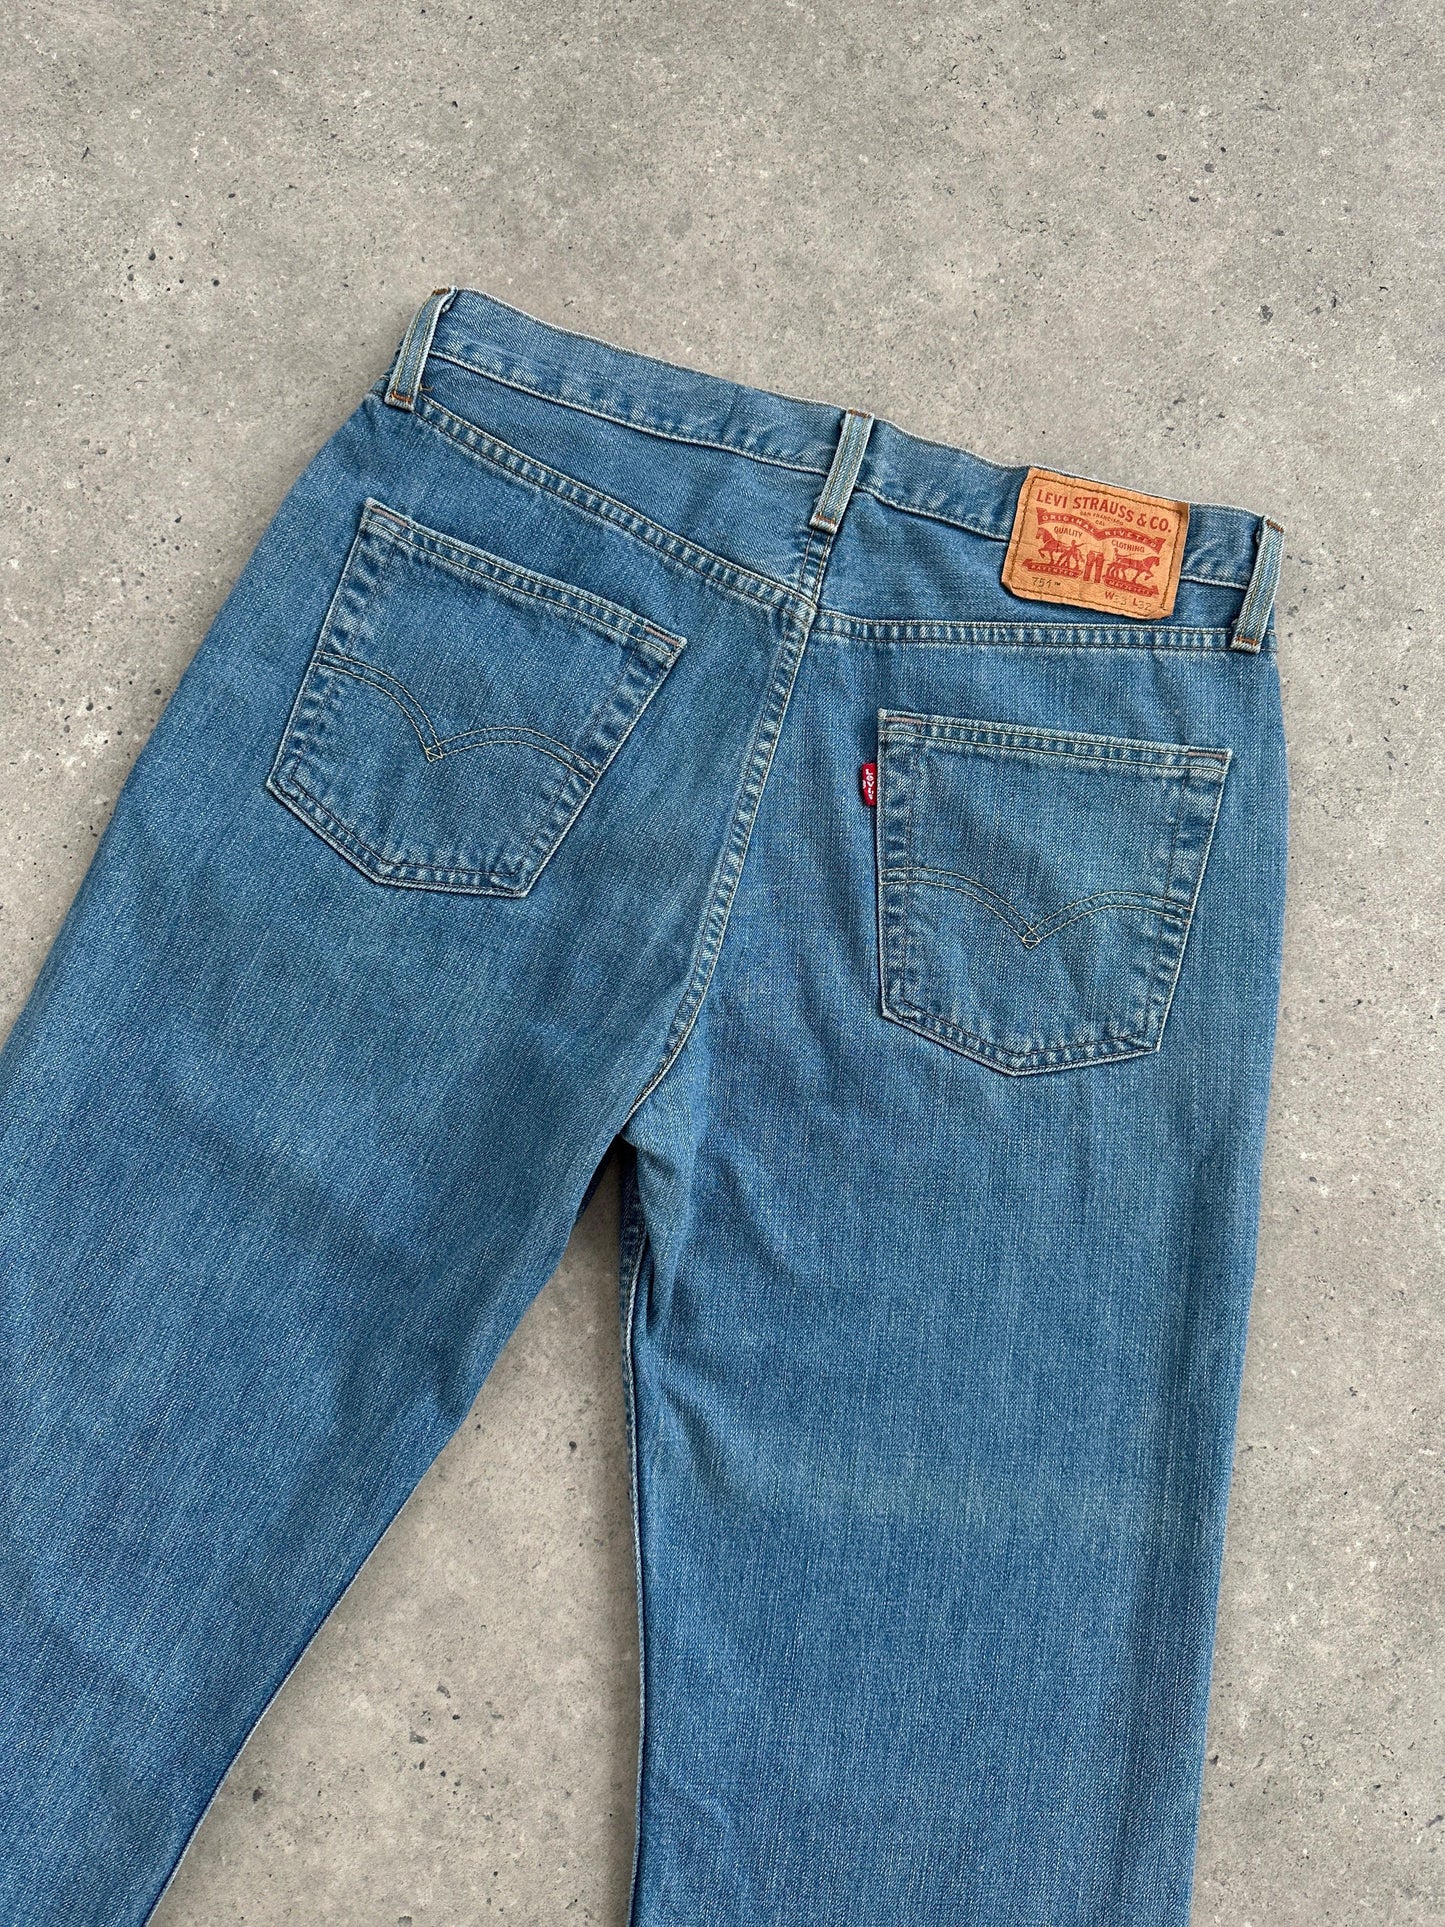 Levi’s 751 Straight Leg Denim Jeans - W32 - Known Source